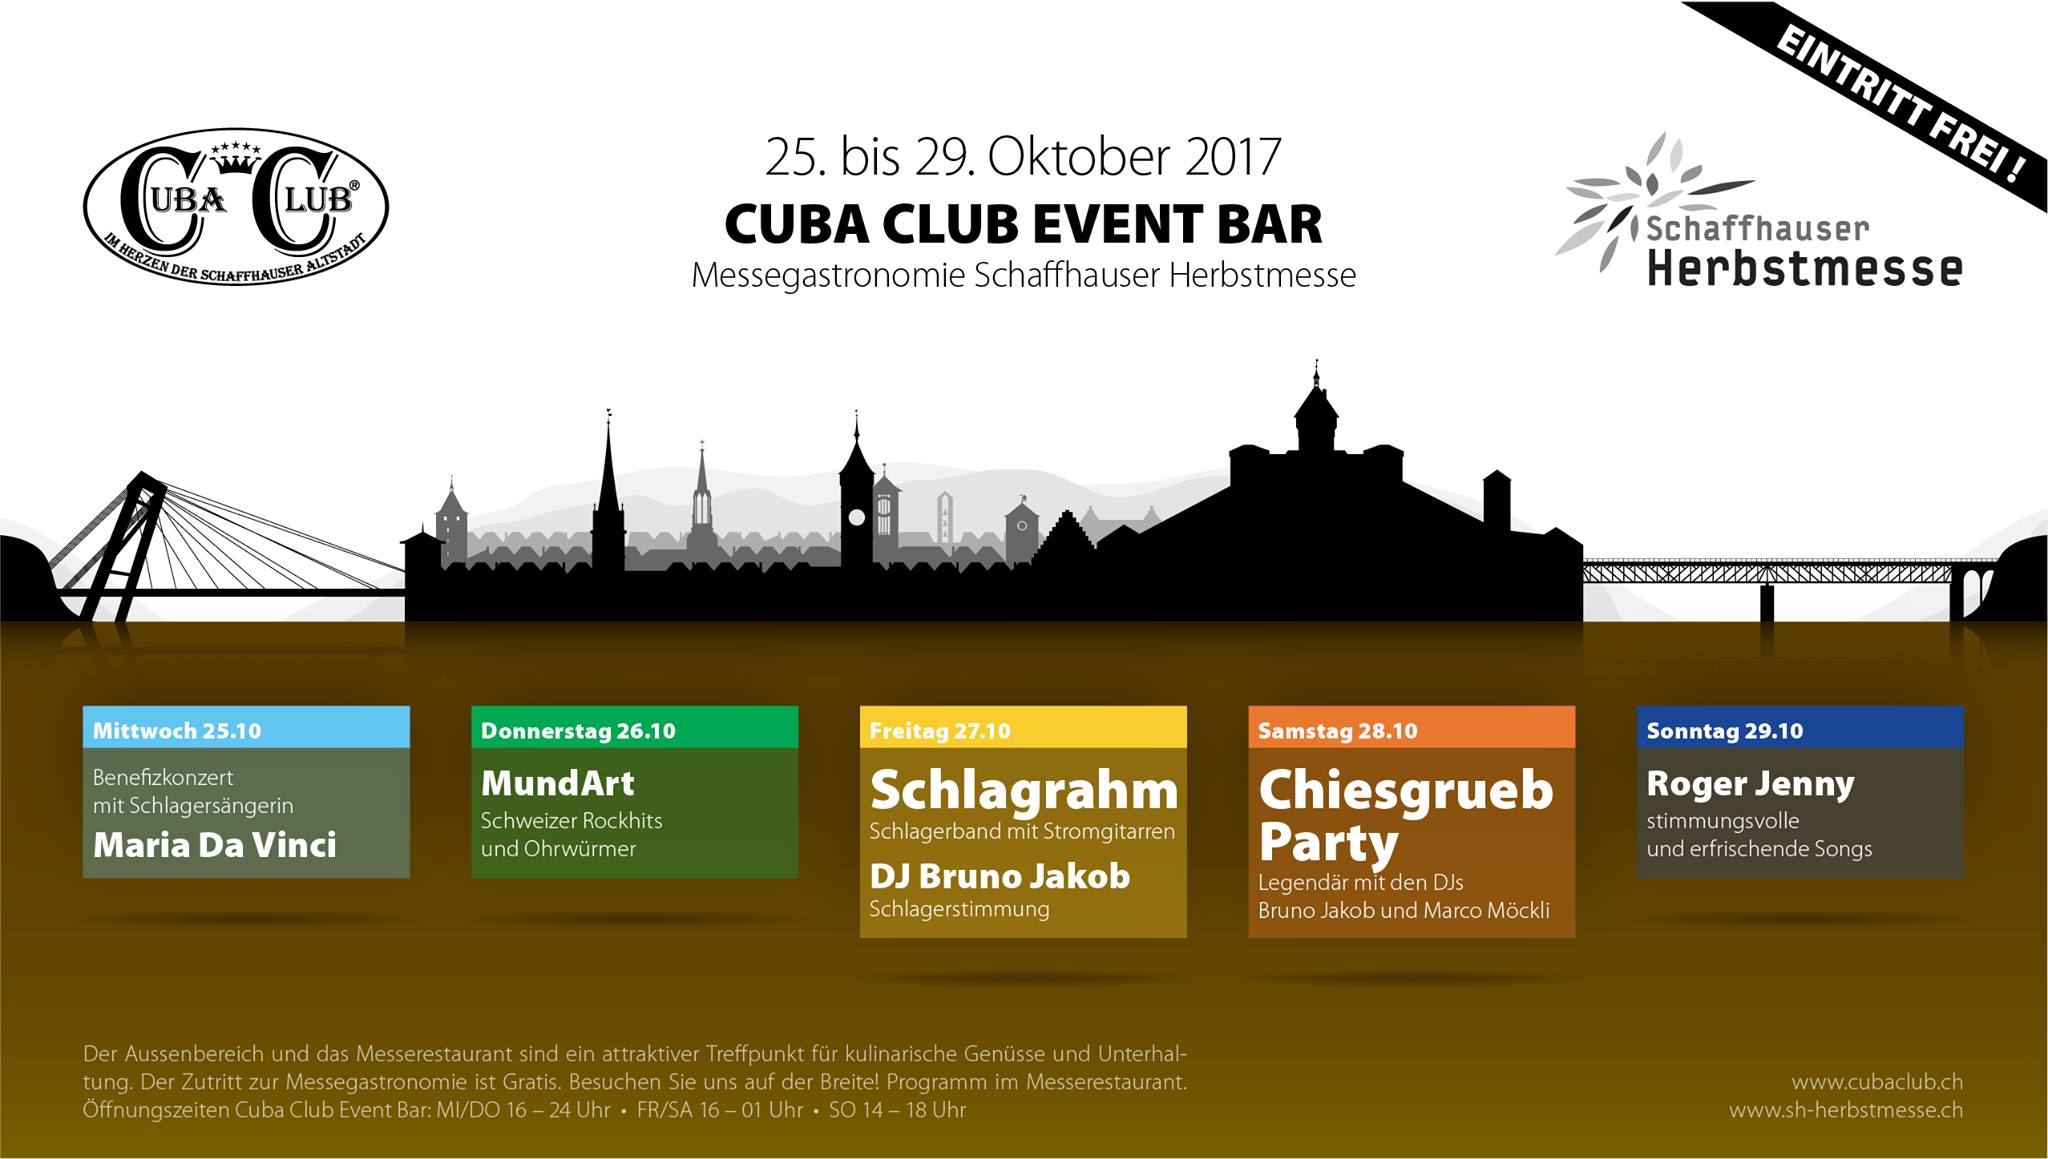 Cuba Club Event Bar Schaffhauser Herbstmesse 2017 mit Dr. Ginger im Sortiment